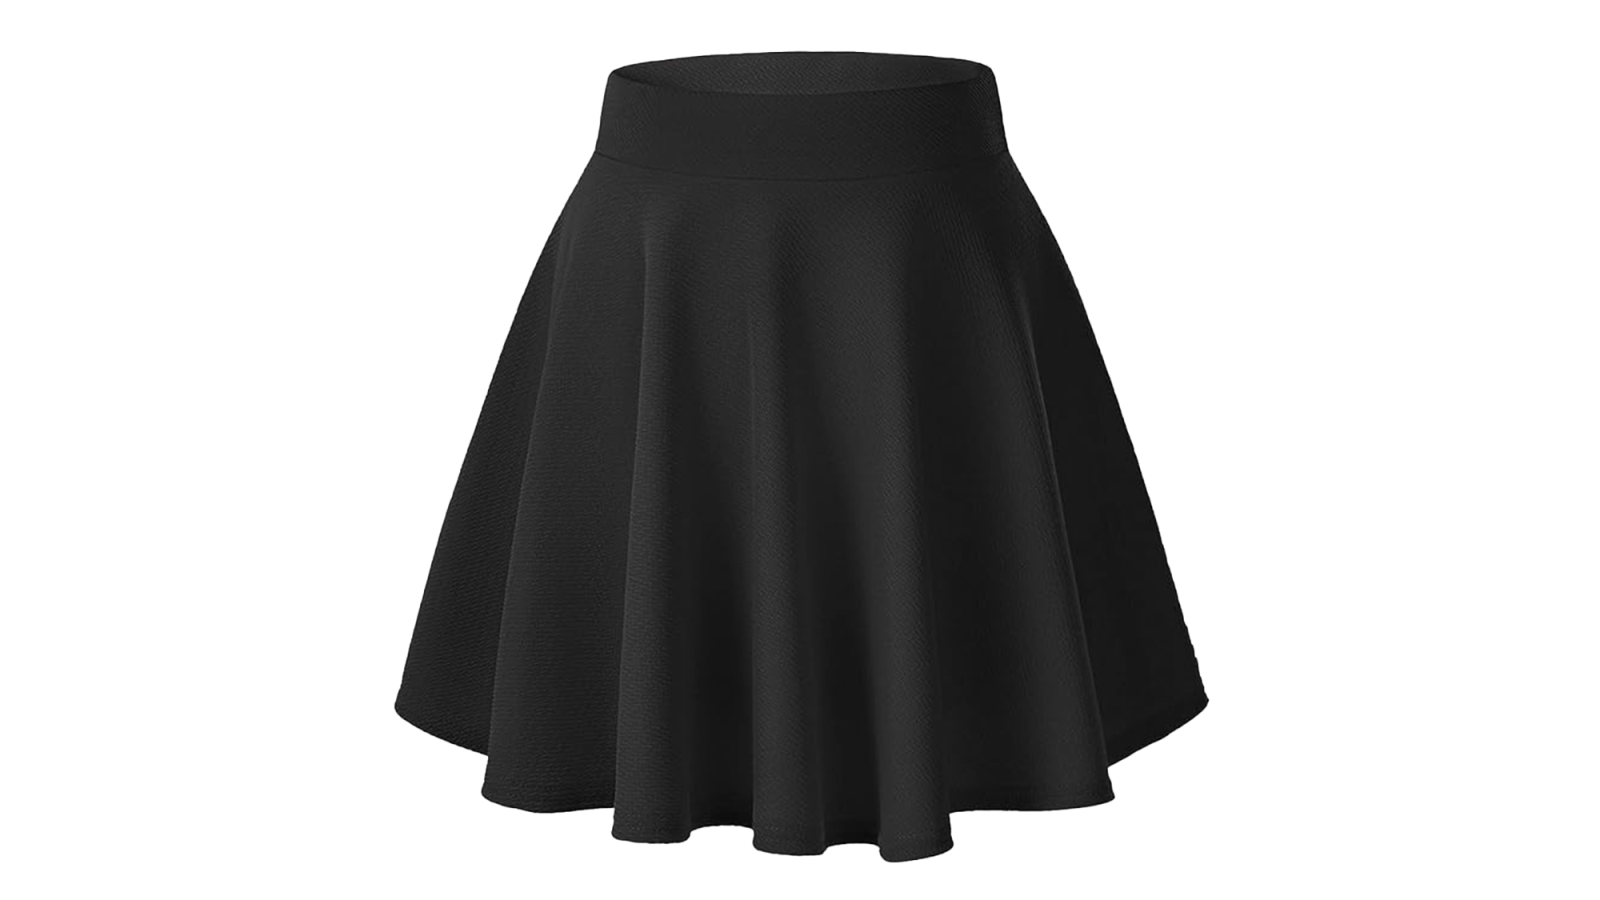 Urban Coco mini skirt